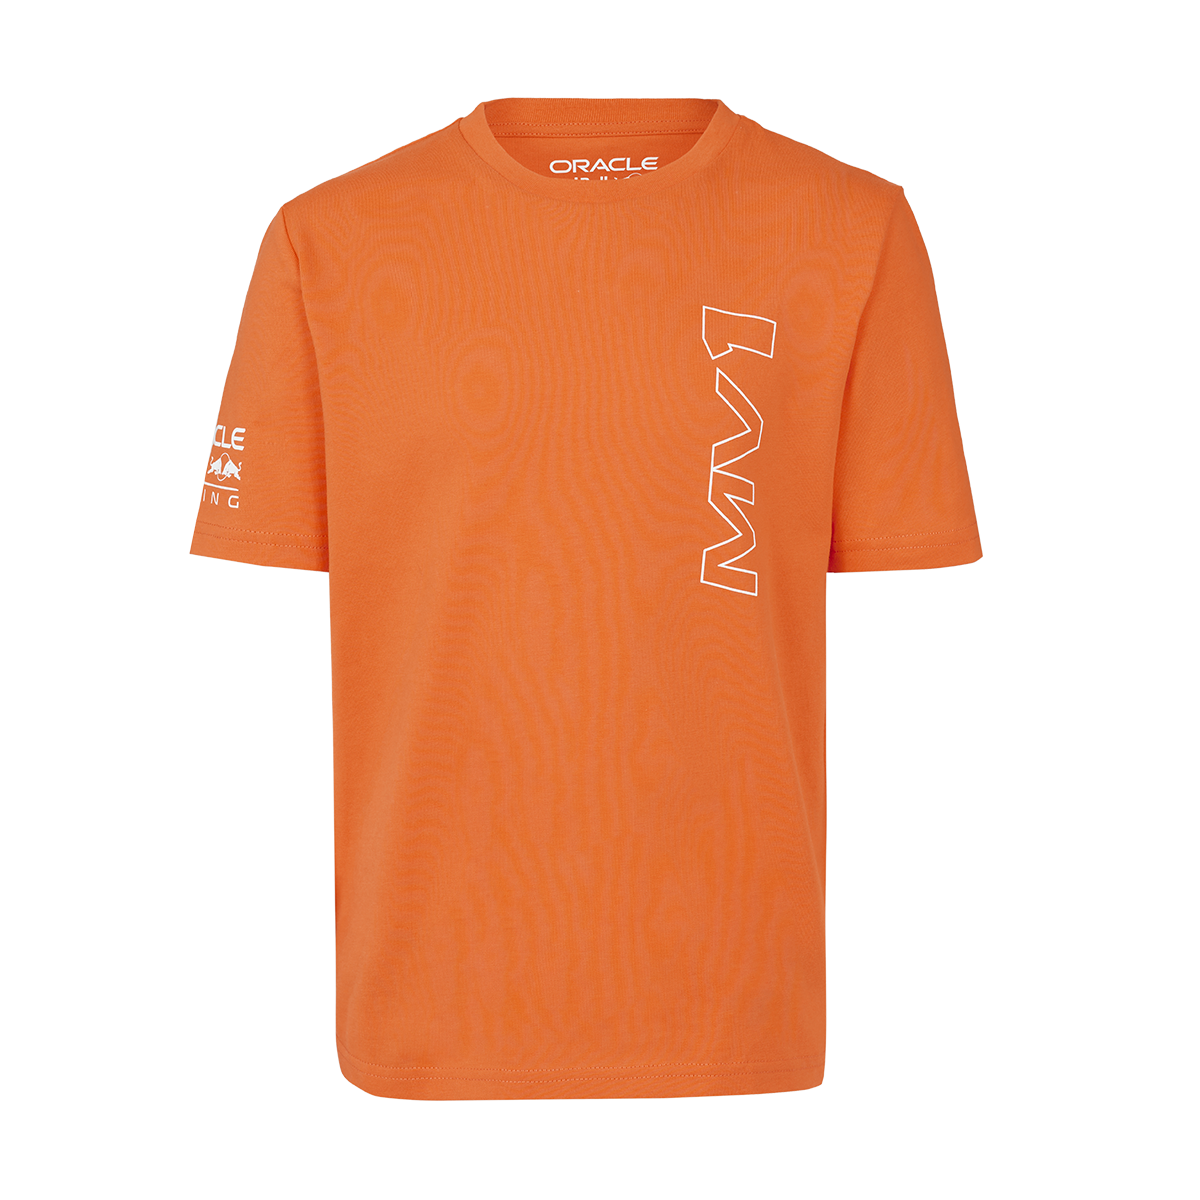 Kids - Orange Driver T-shirt Max Verstappen